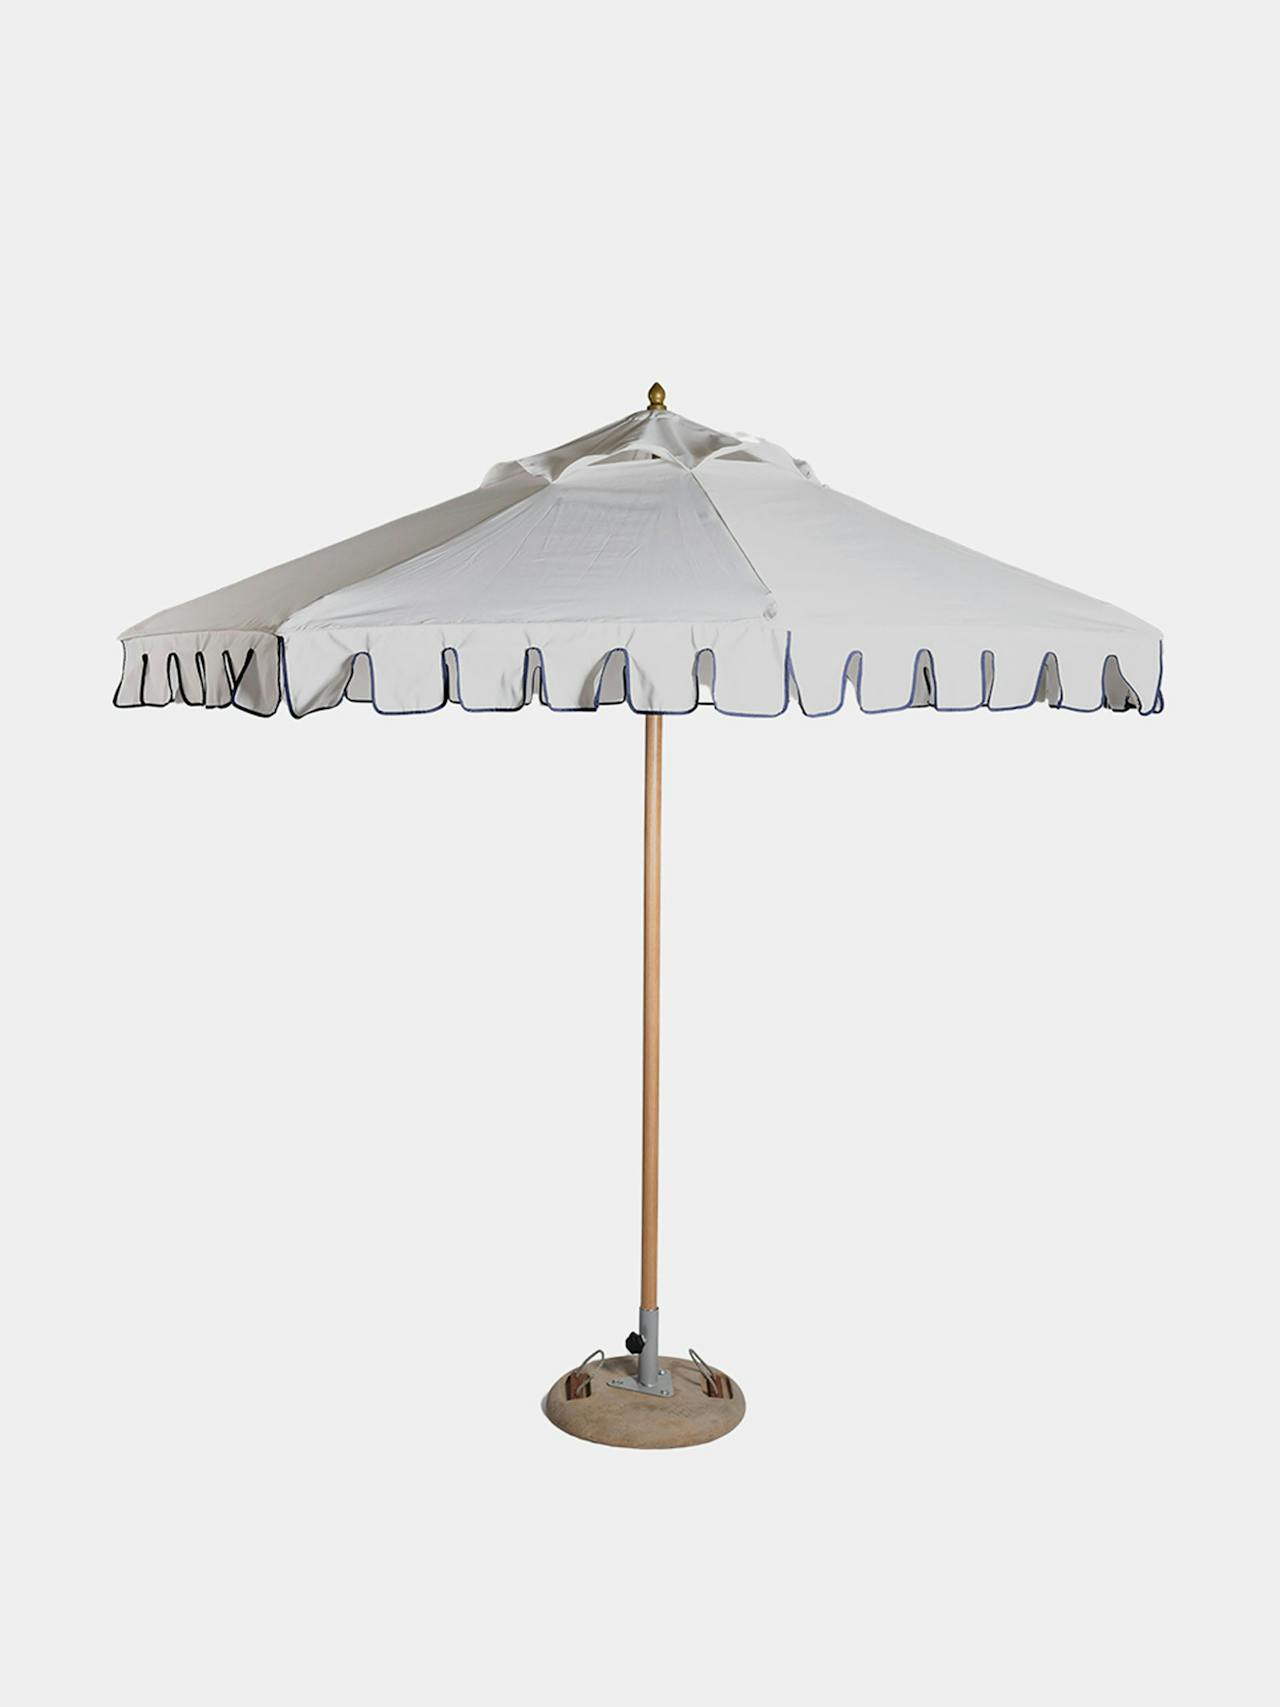 Scalloped parasol with navy trim in ecru, 250cm